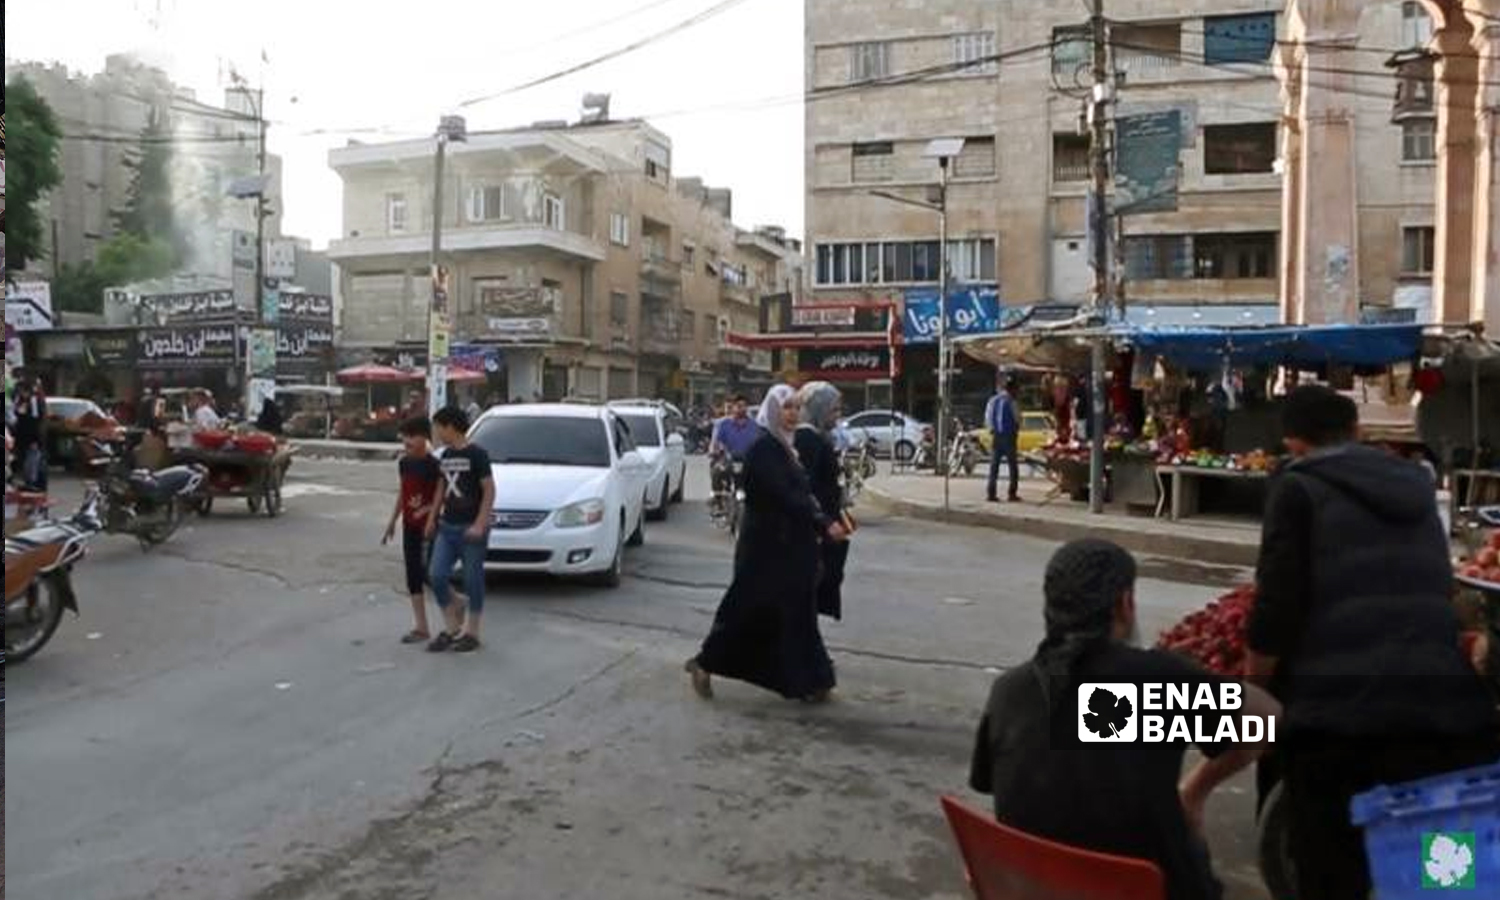 Syrians passing through a public square in Idlib, northwest of Syria, 3 May 2021 (Enab Baladi)